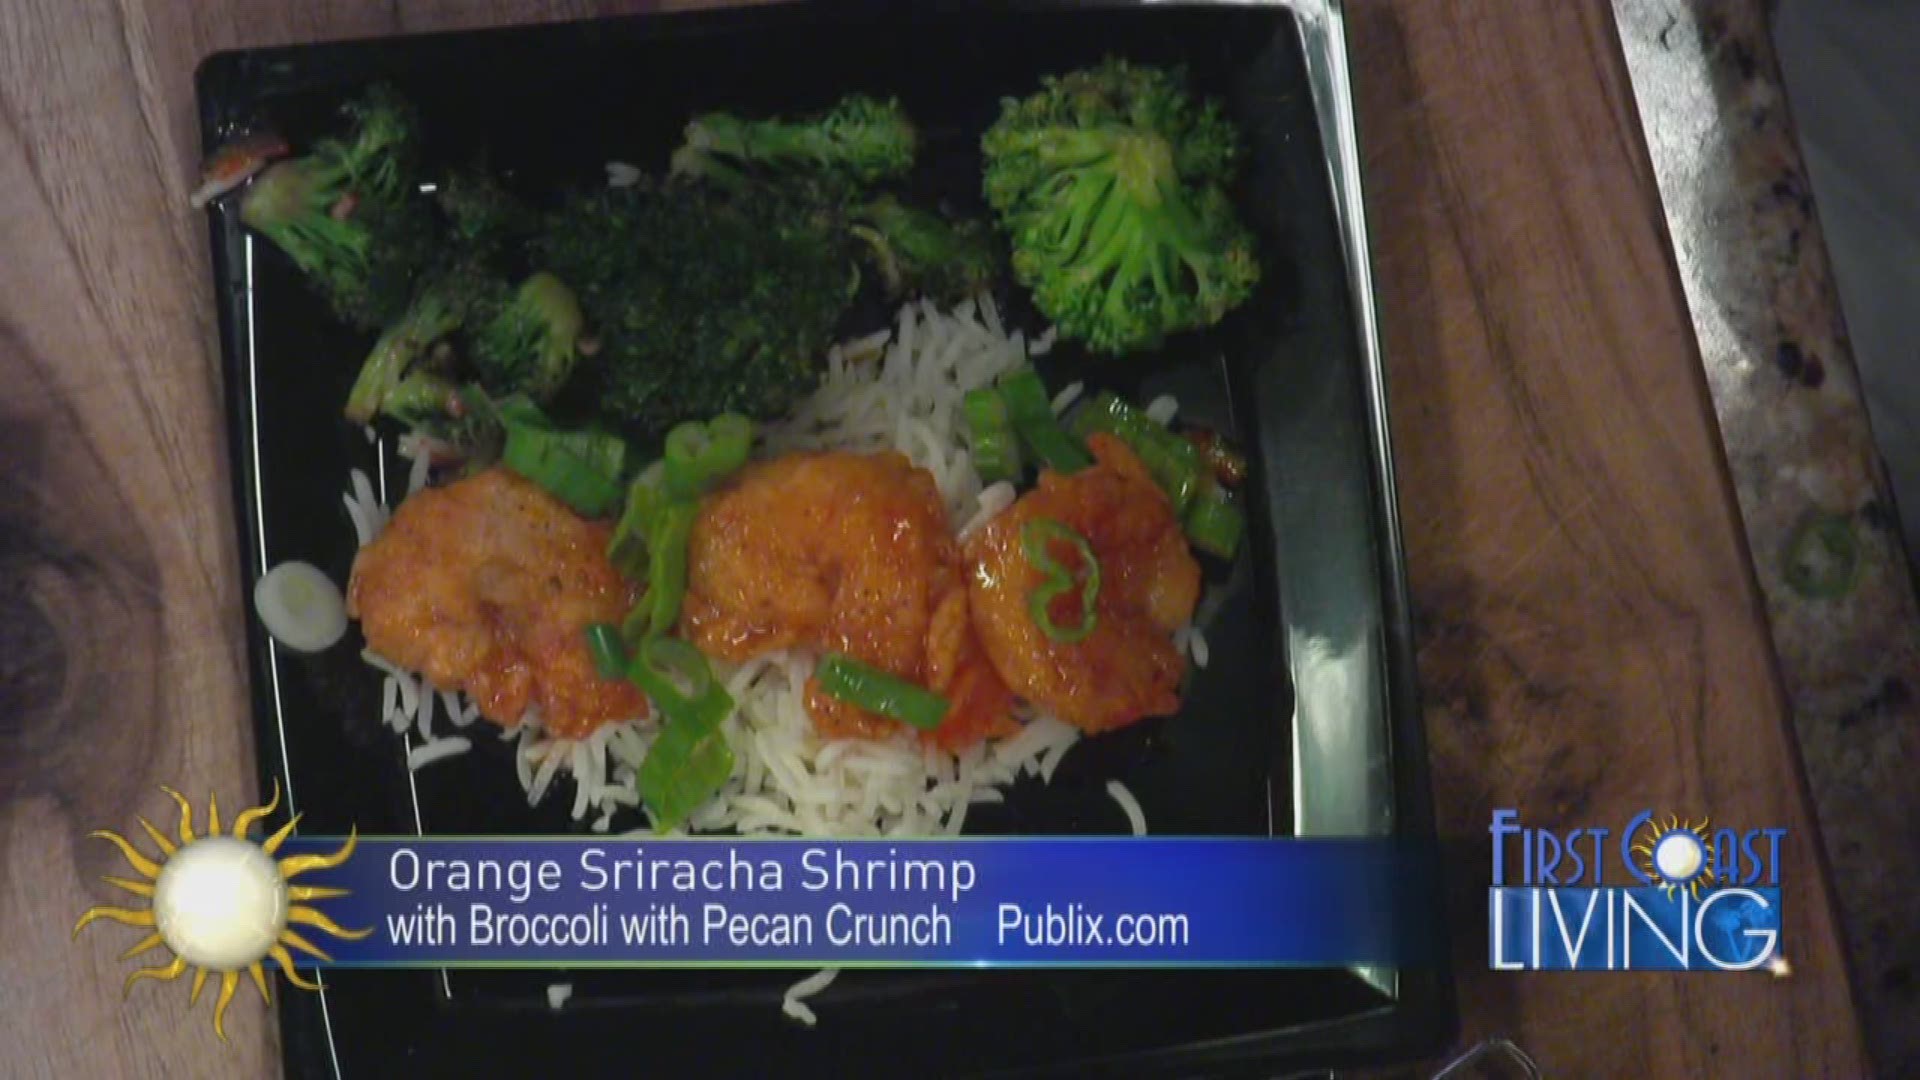 Publix � Orange Sriracha Shrimp and Broccoli with Pecan Crunch